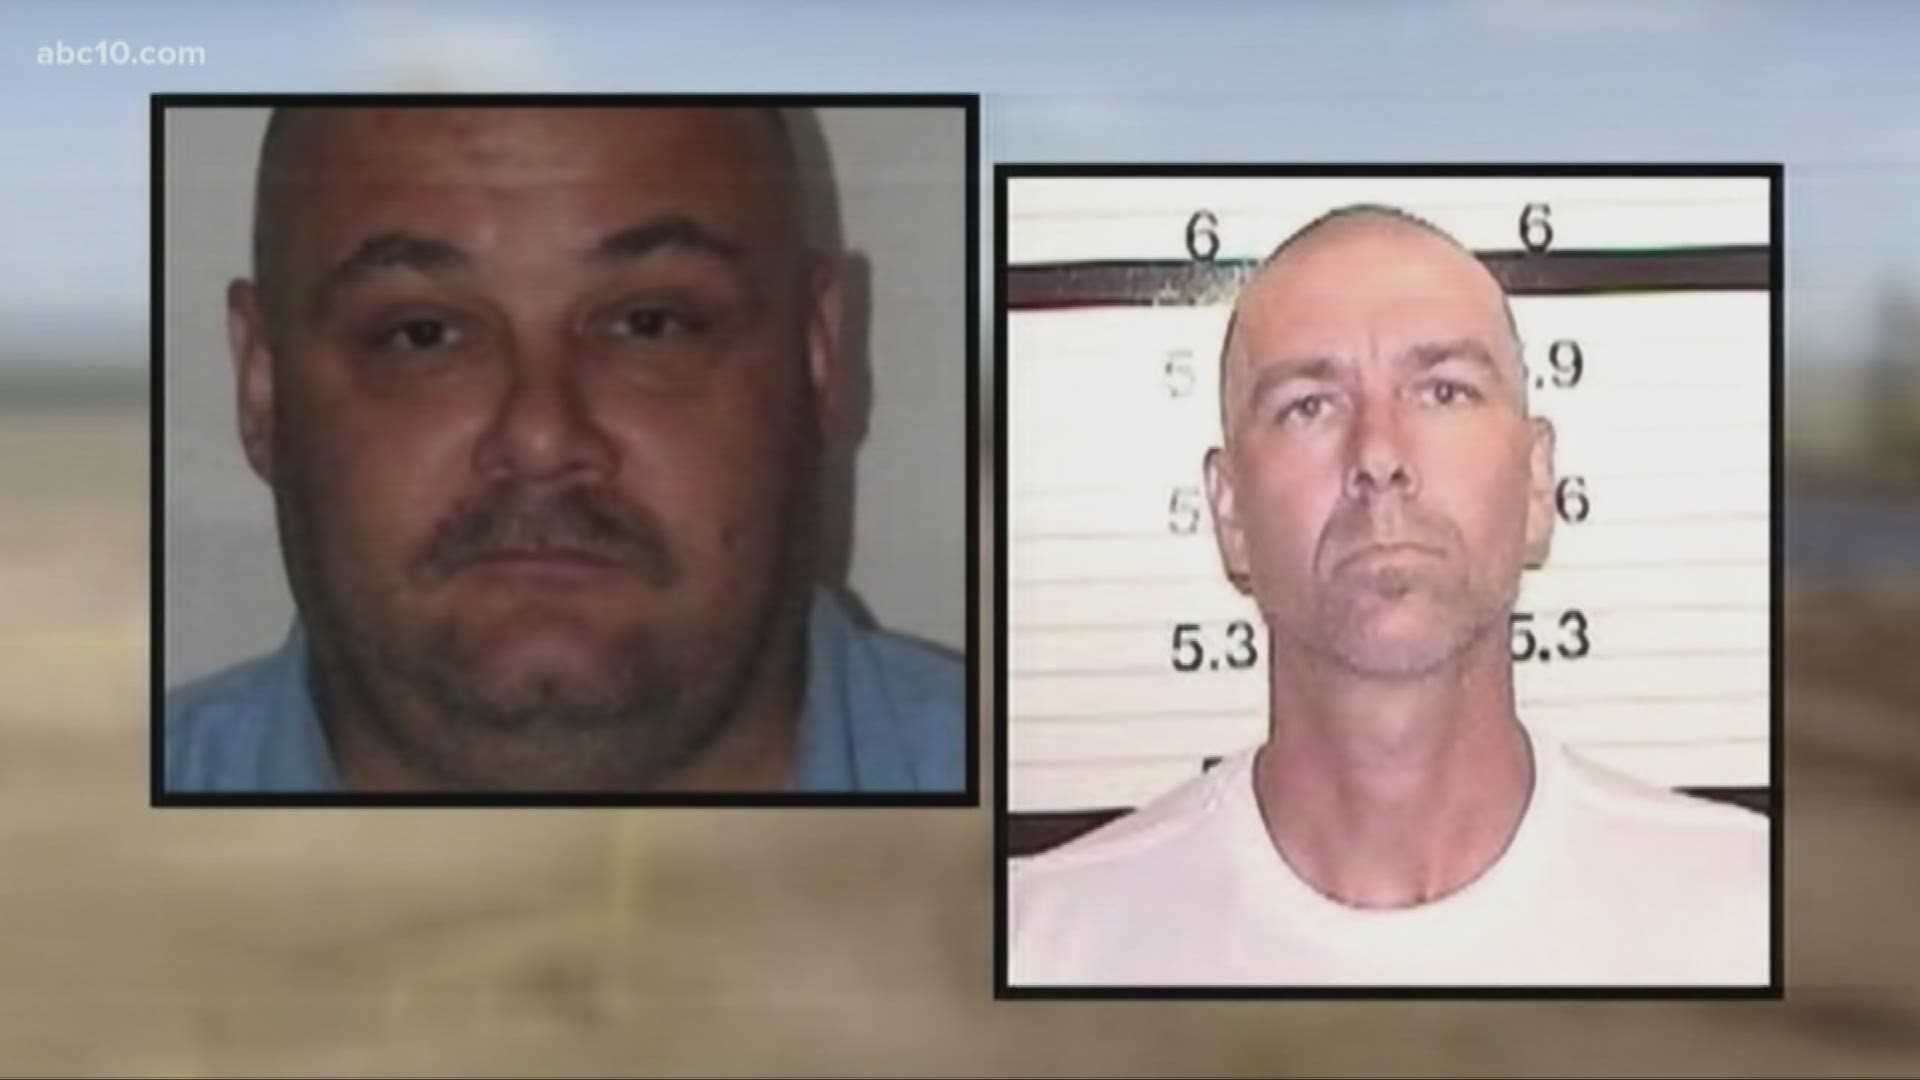 The Speed Freak Killers, Wesley Shermantine and Loren Herzog, were convicted in 2001 of multiple murders.